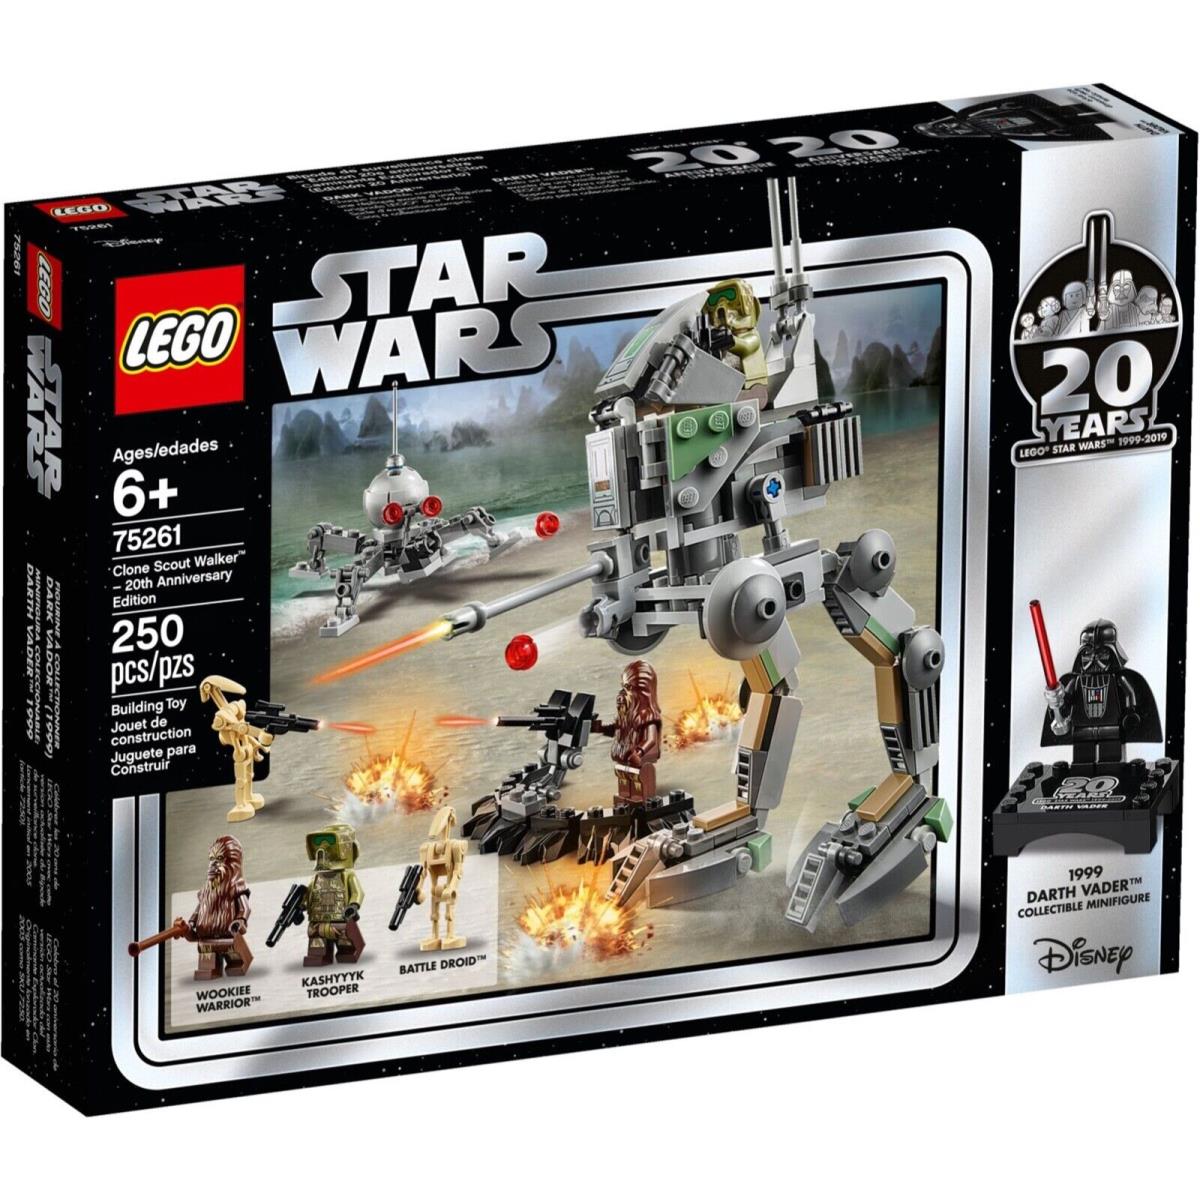 Lego Star Wars 75261 Clone Scout Walker 20th Anniversary